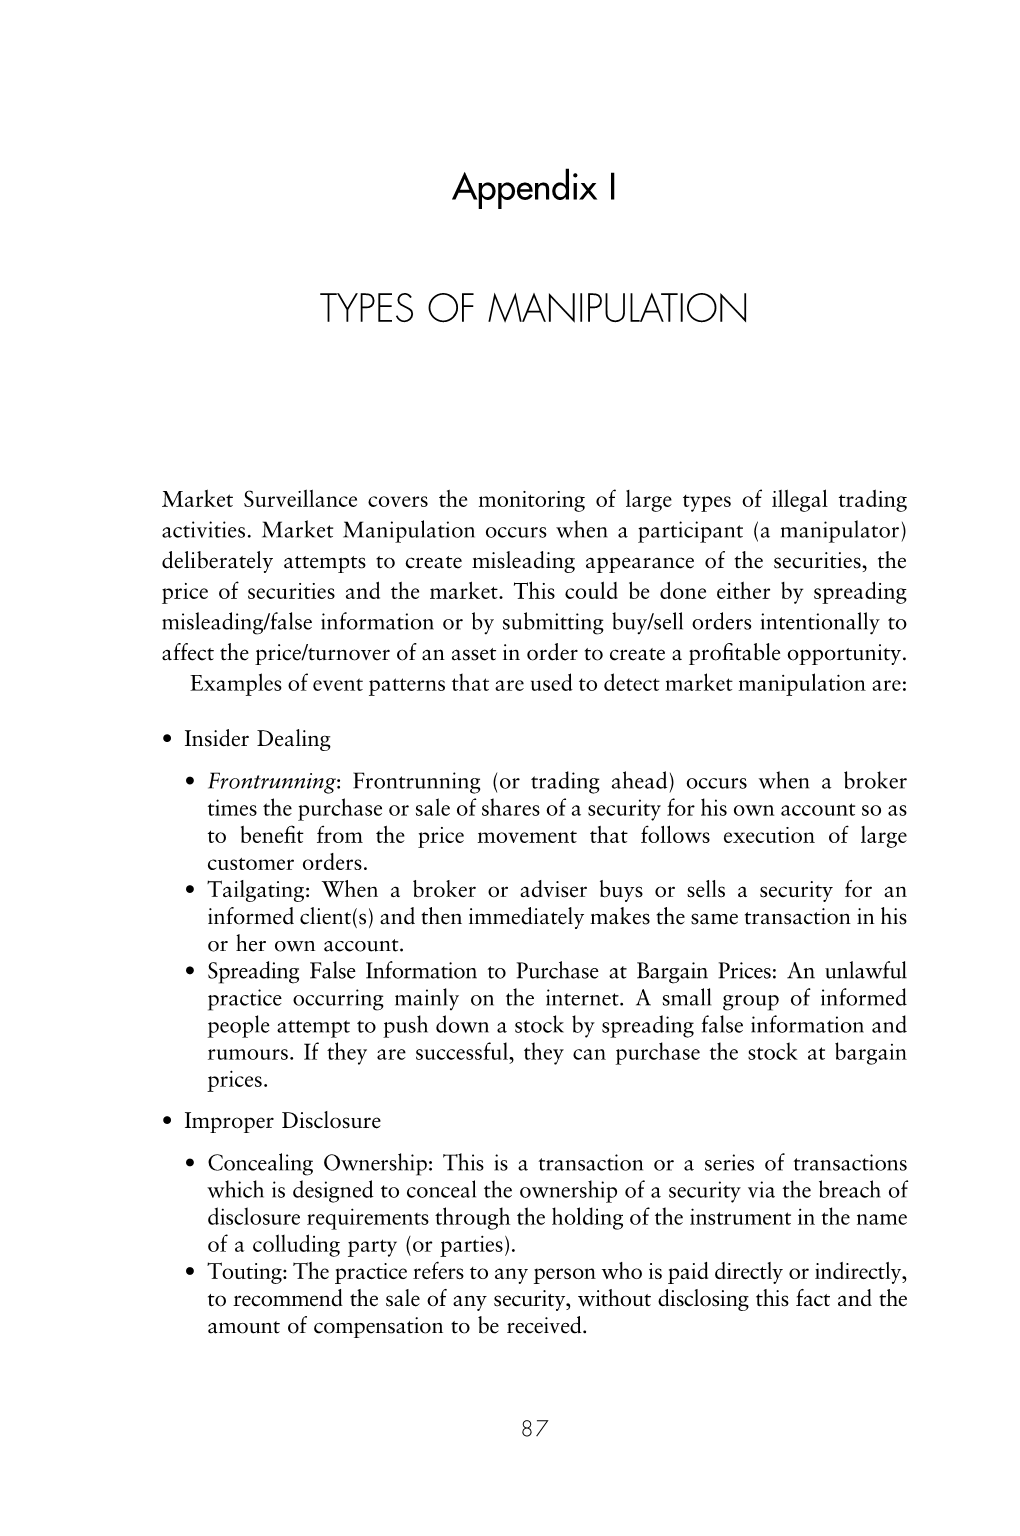 Types of Manipulation